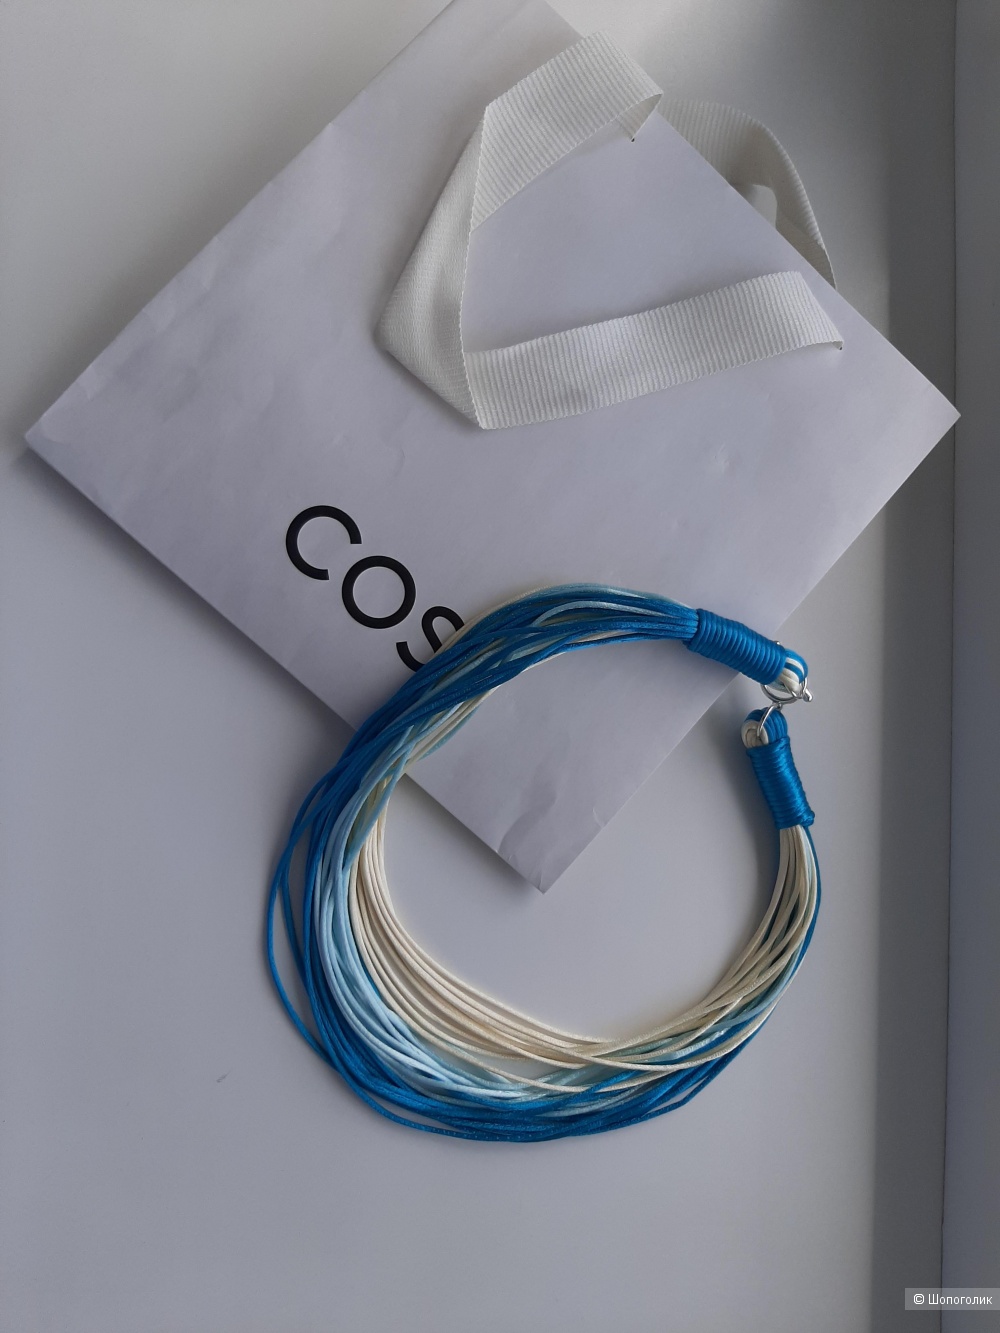 Ожерелье бренда COS